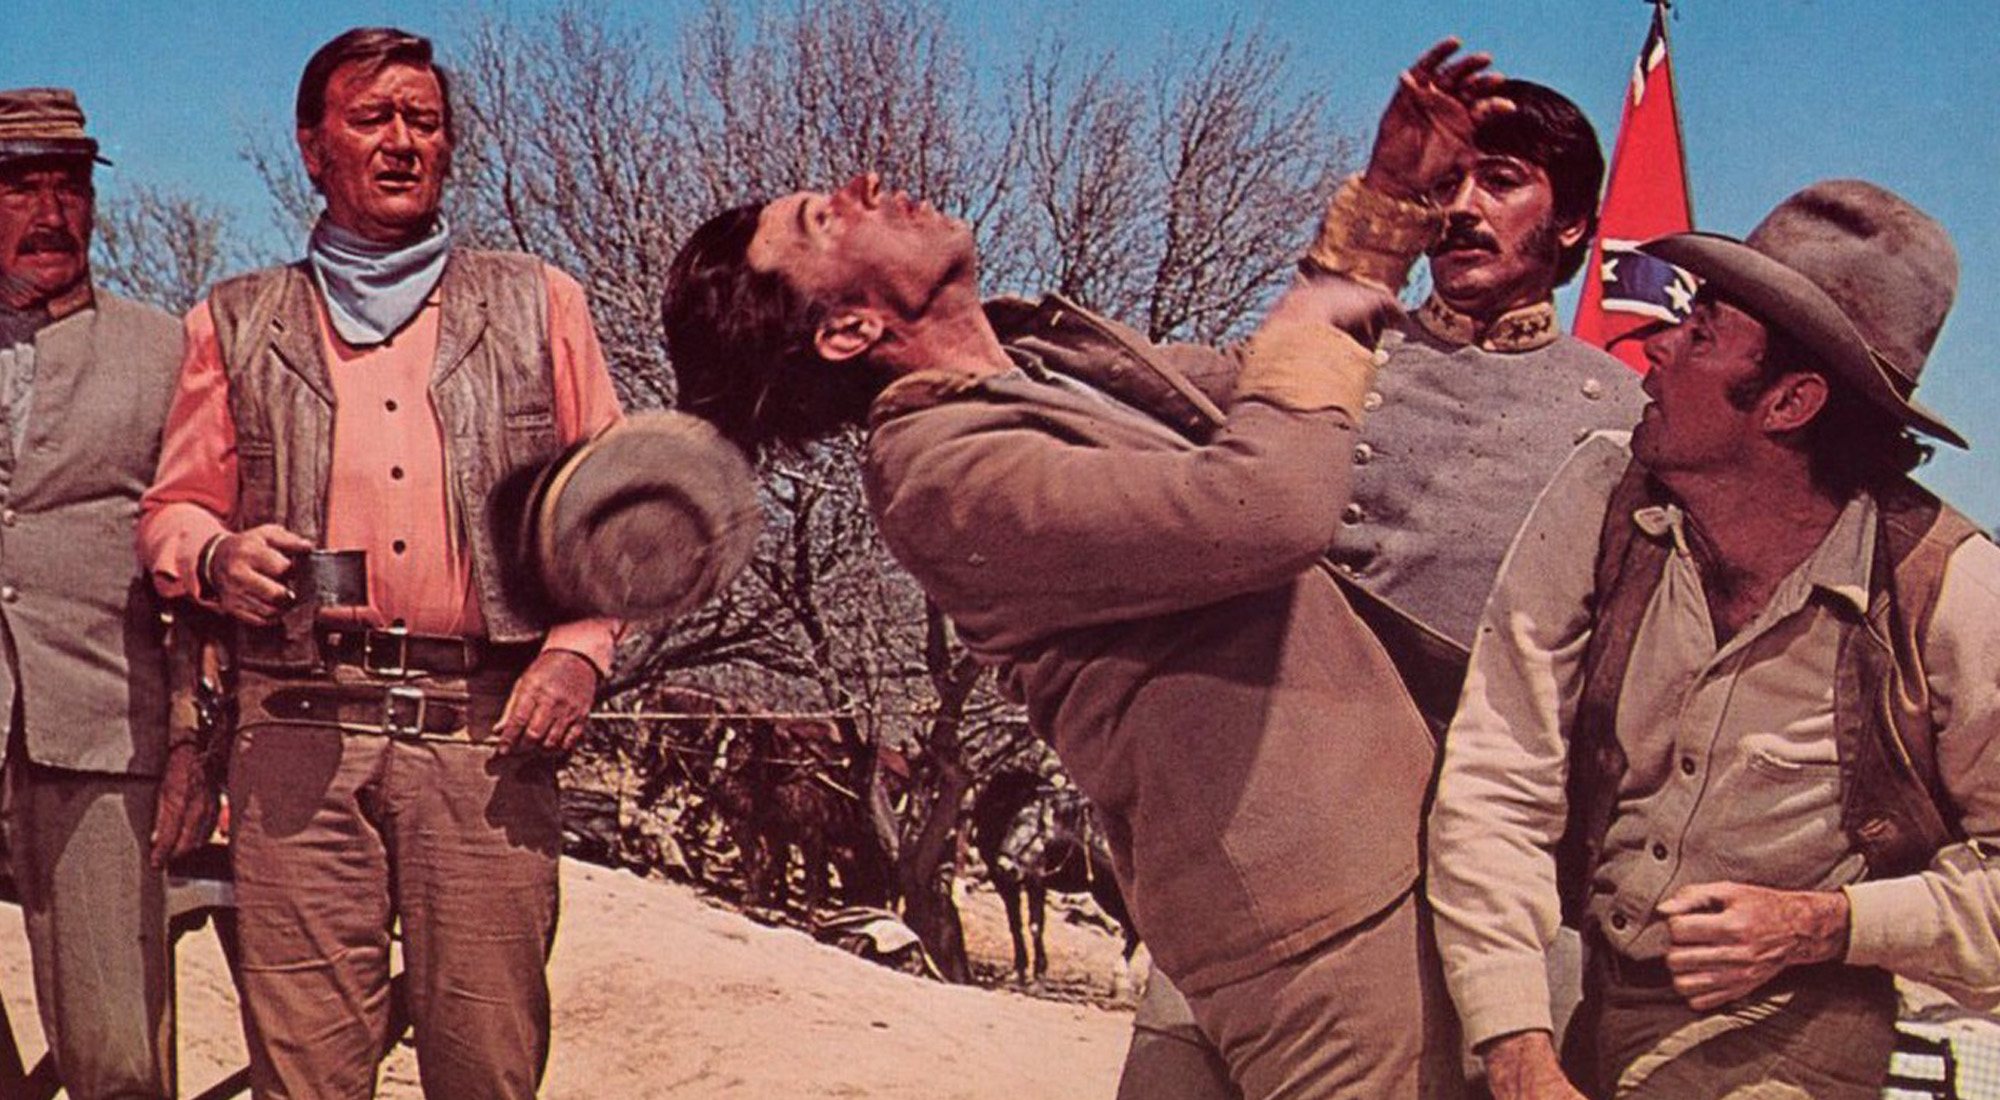 Fotograma de la película "Los indestructibles" (1969)